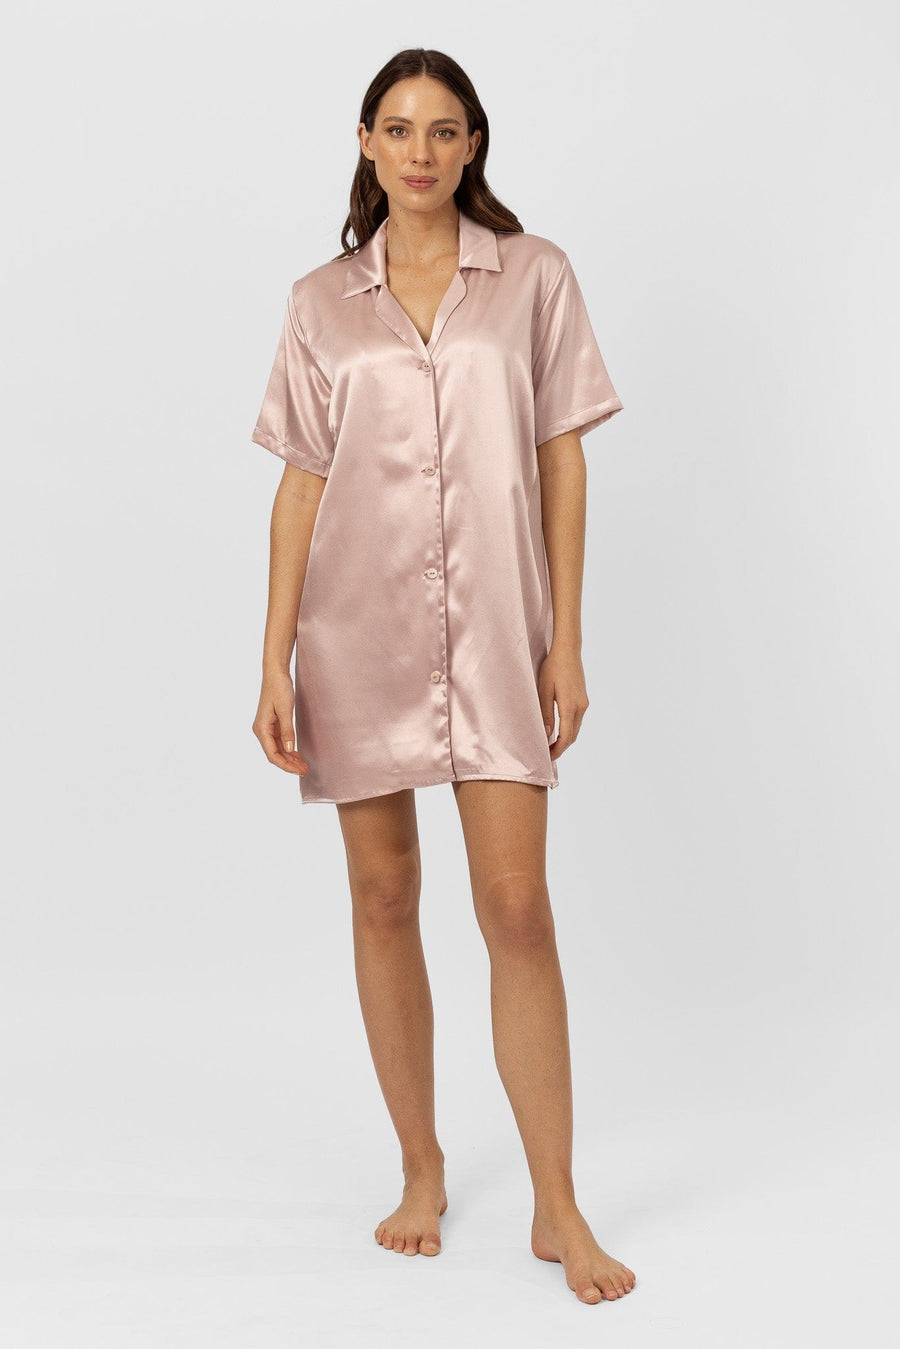 Odel Basics Light Pink Short Sleeve Tshirt Dress